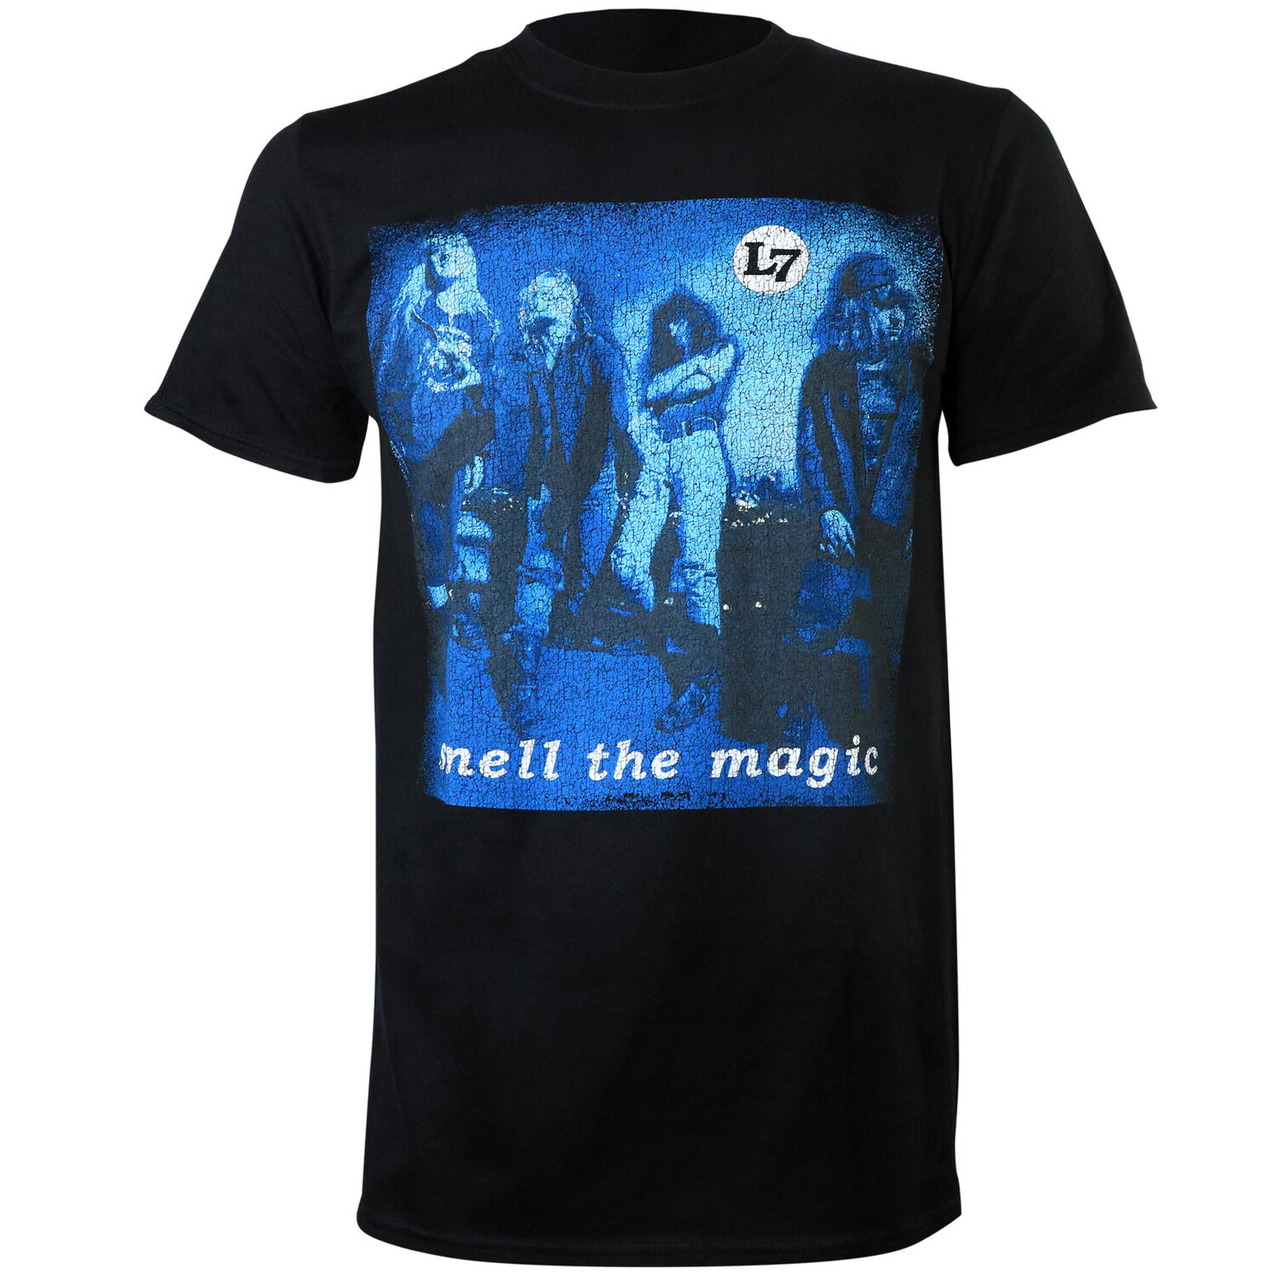 L7 Smell the Magic T-Shirt